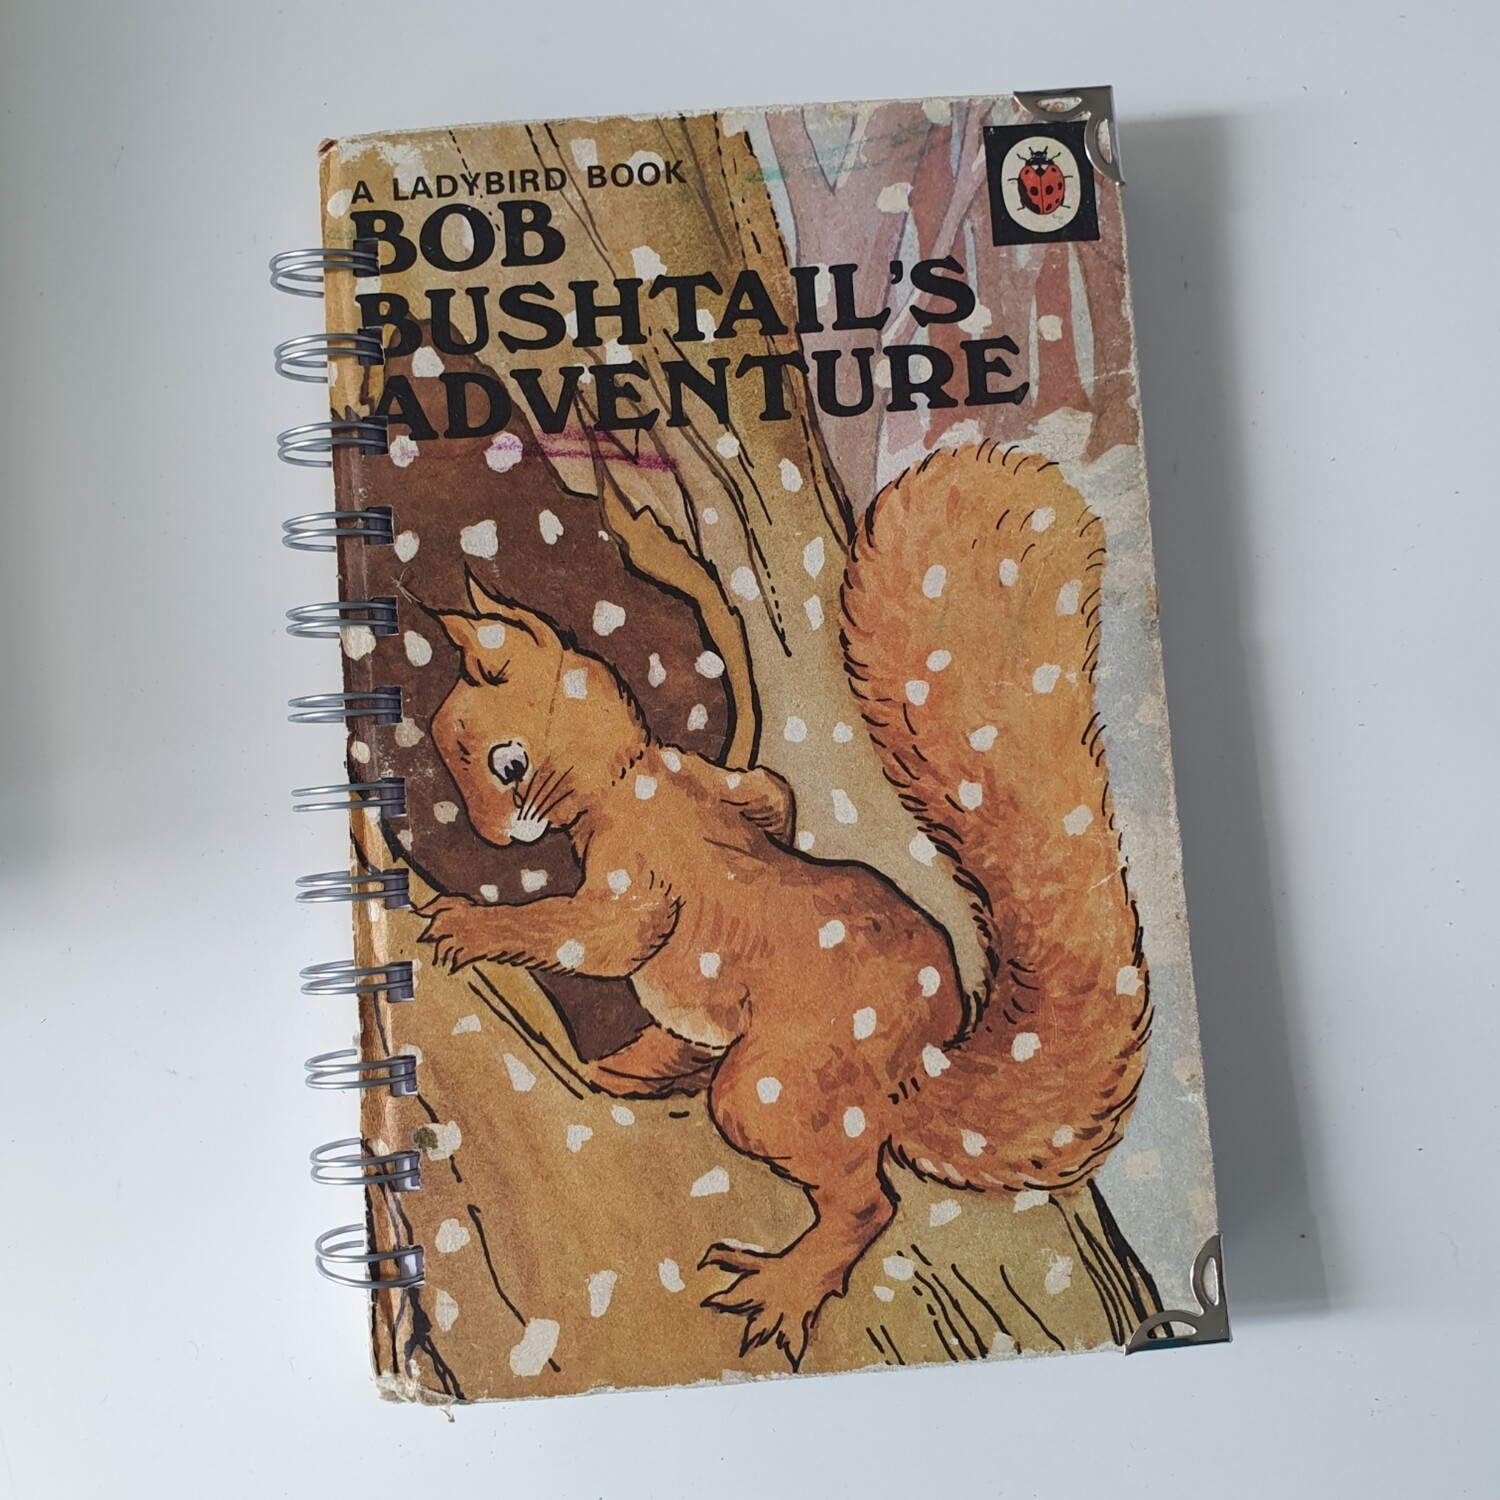 Bob Bushtail's Adventure plain paper notebook - ladybird book, squirrel